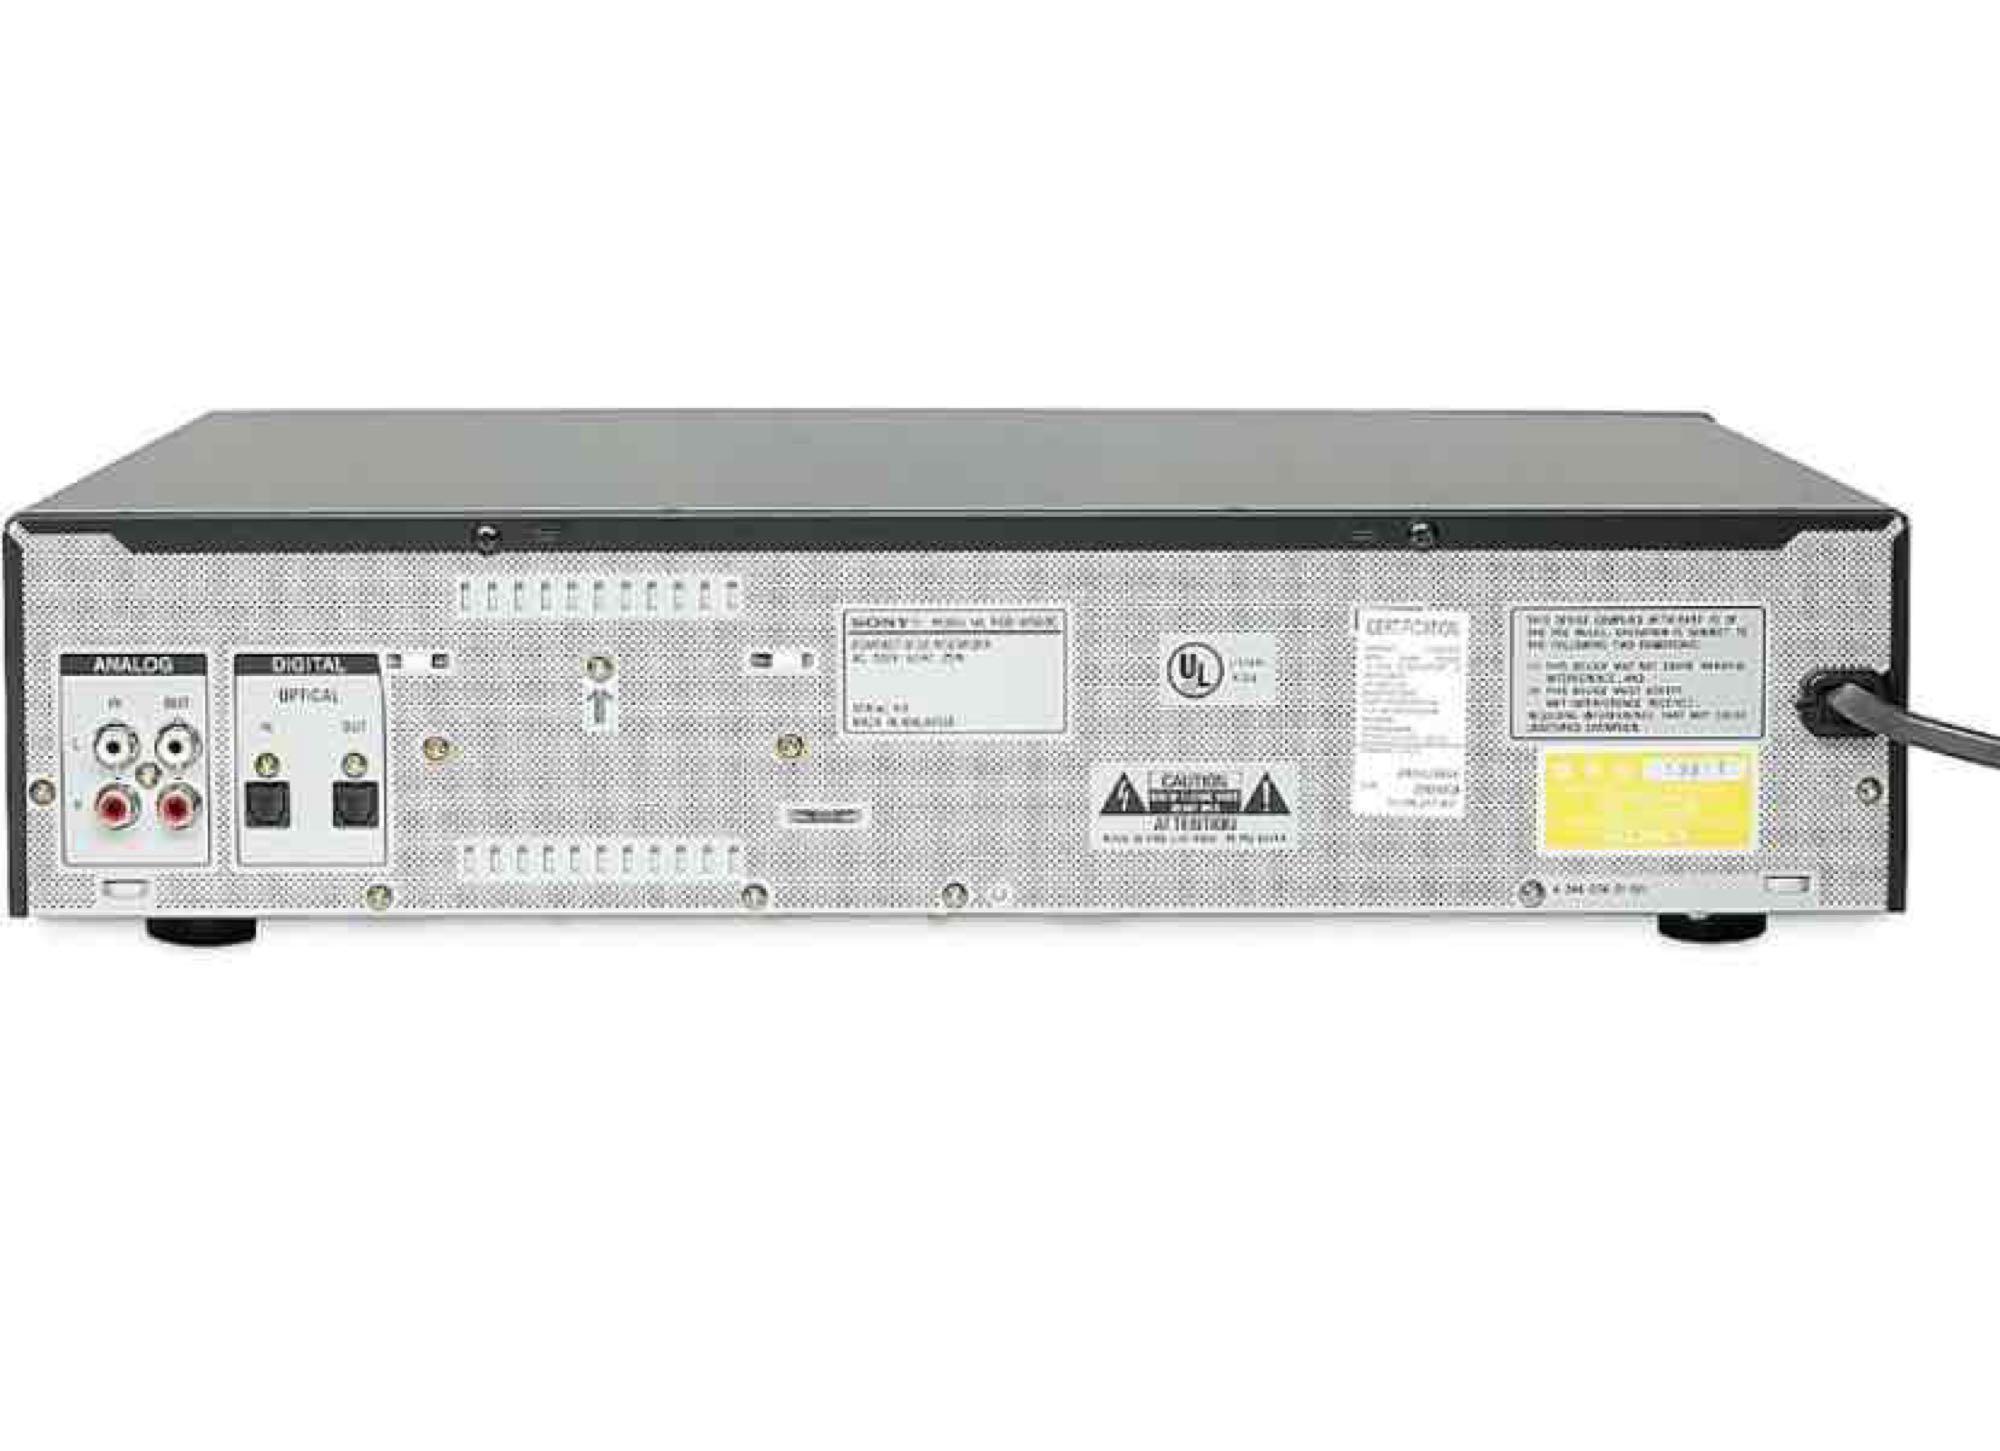 Sony RCD-W500C CD Player / Recorder